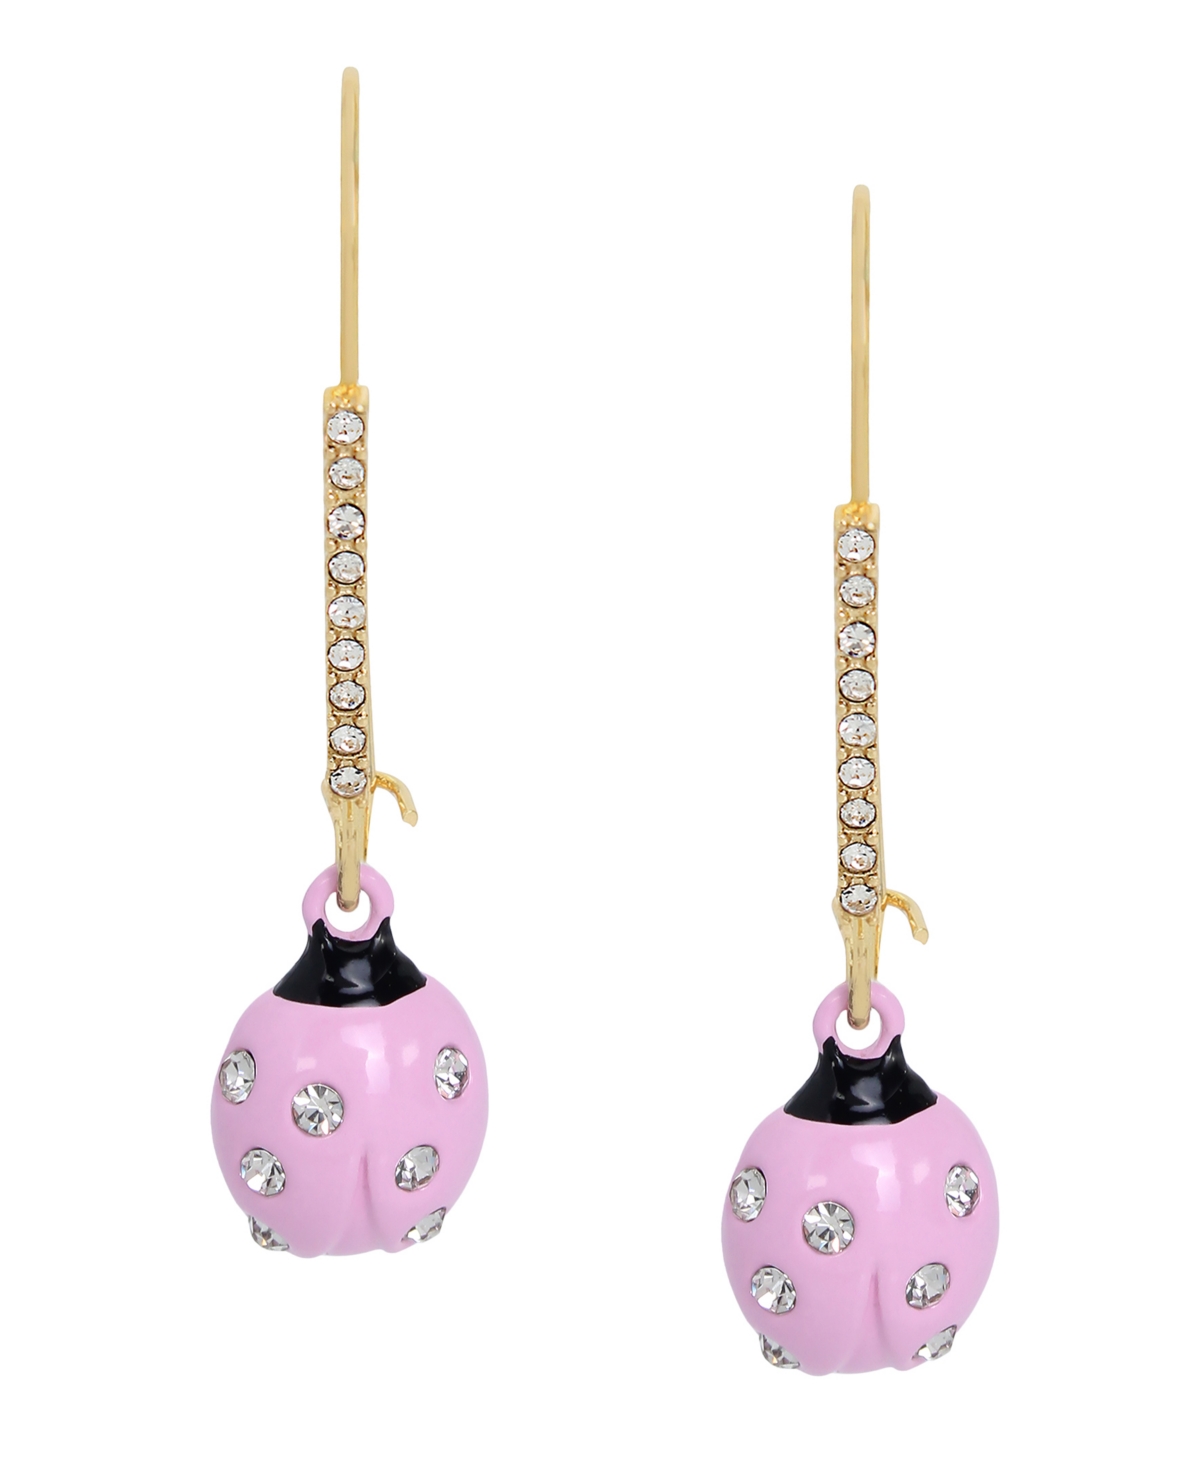 Faux Stone Ladybug Dangle Earrings - Pink, Gold